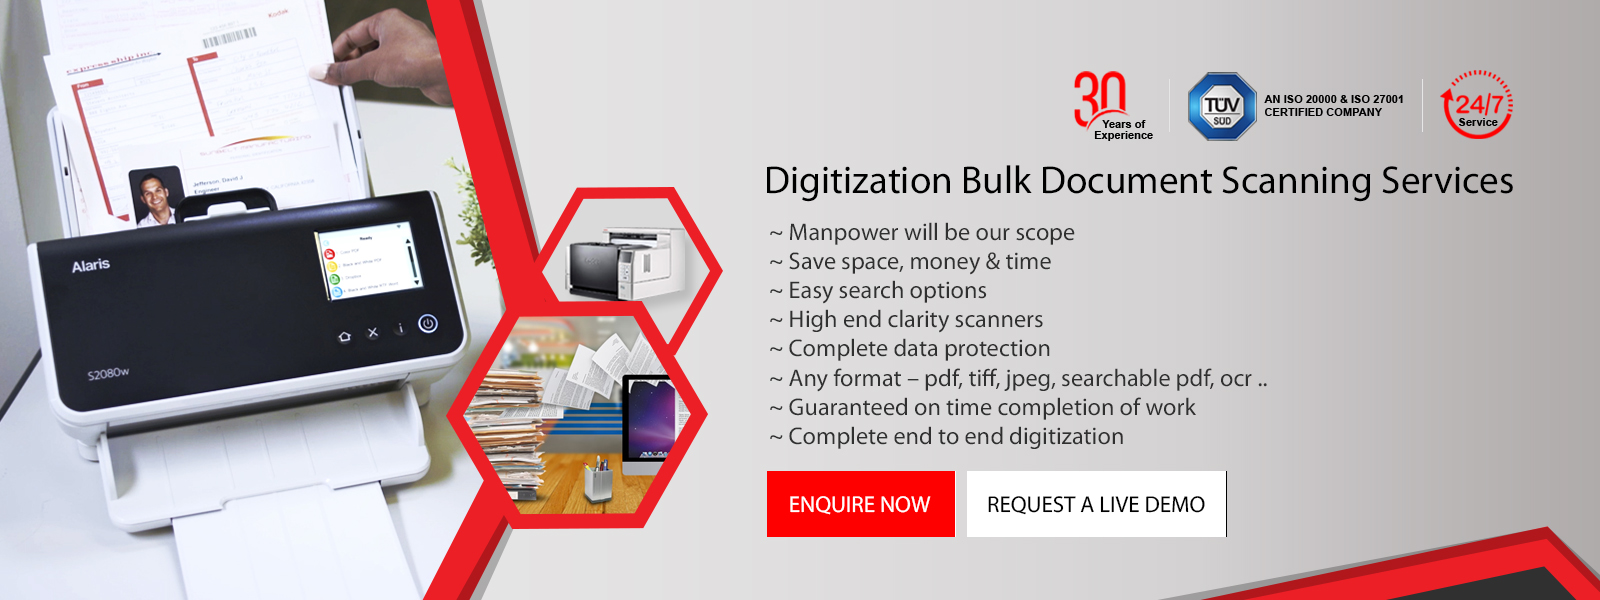 document digitization services companies